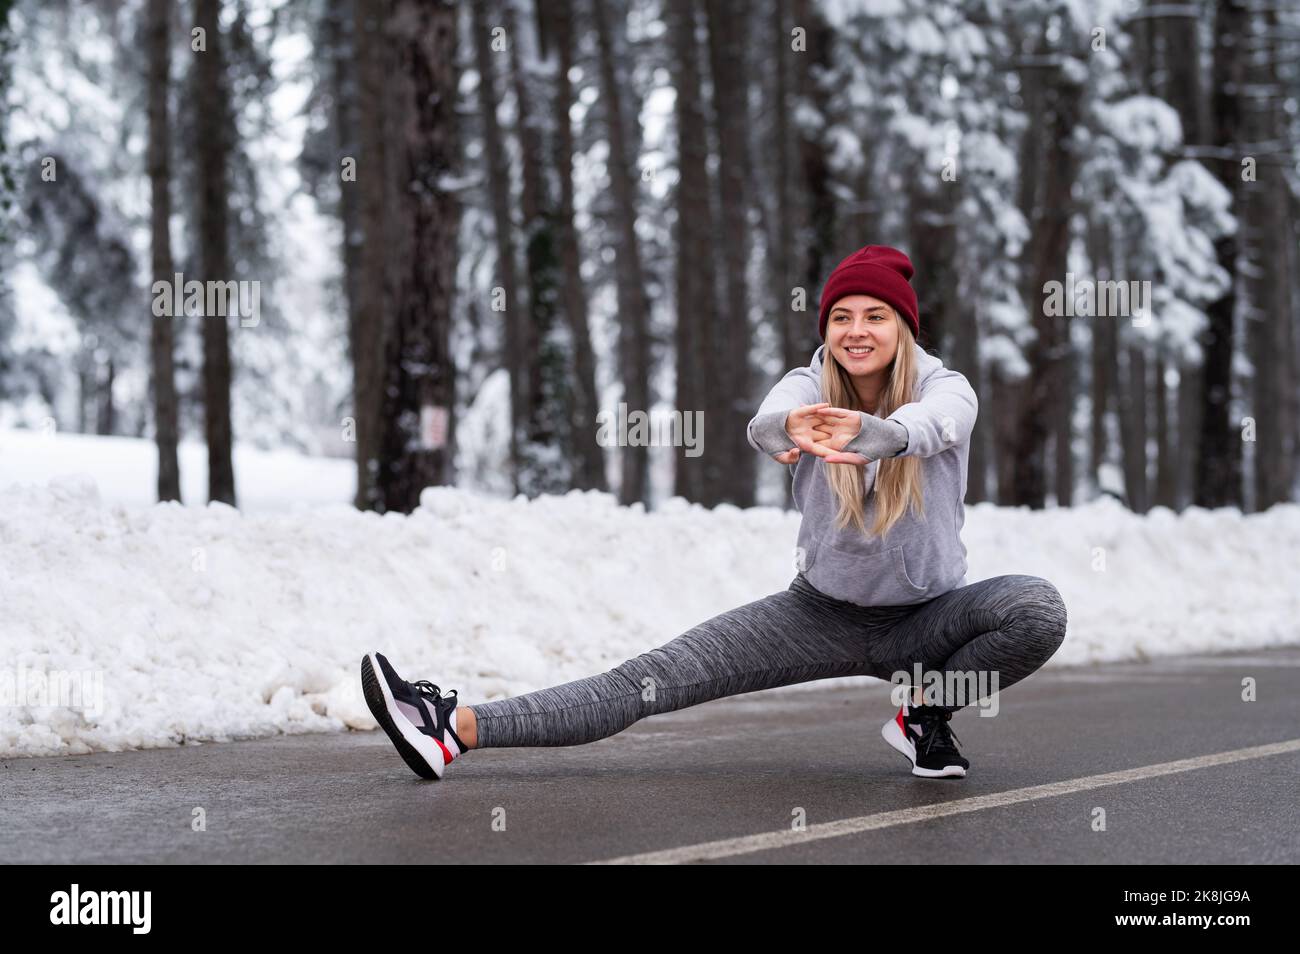 Schöne junge sport Frau tun stretching Fitness Übung im Winter Wald Stockfoto